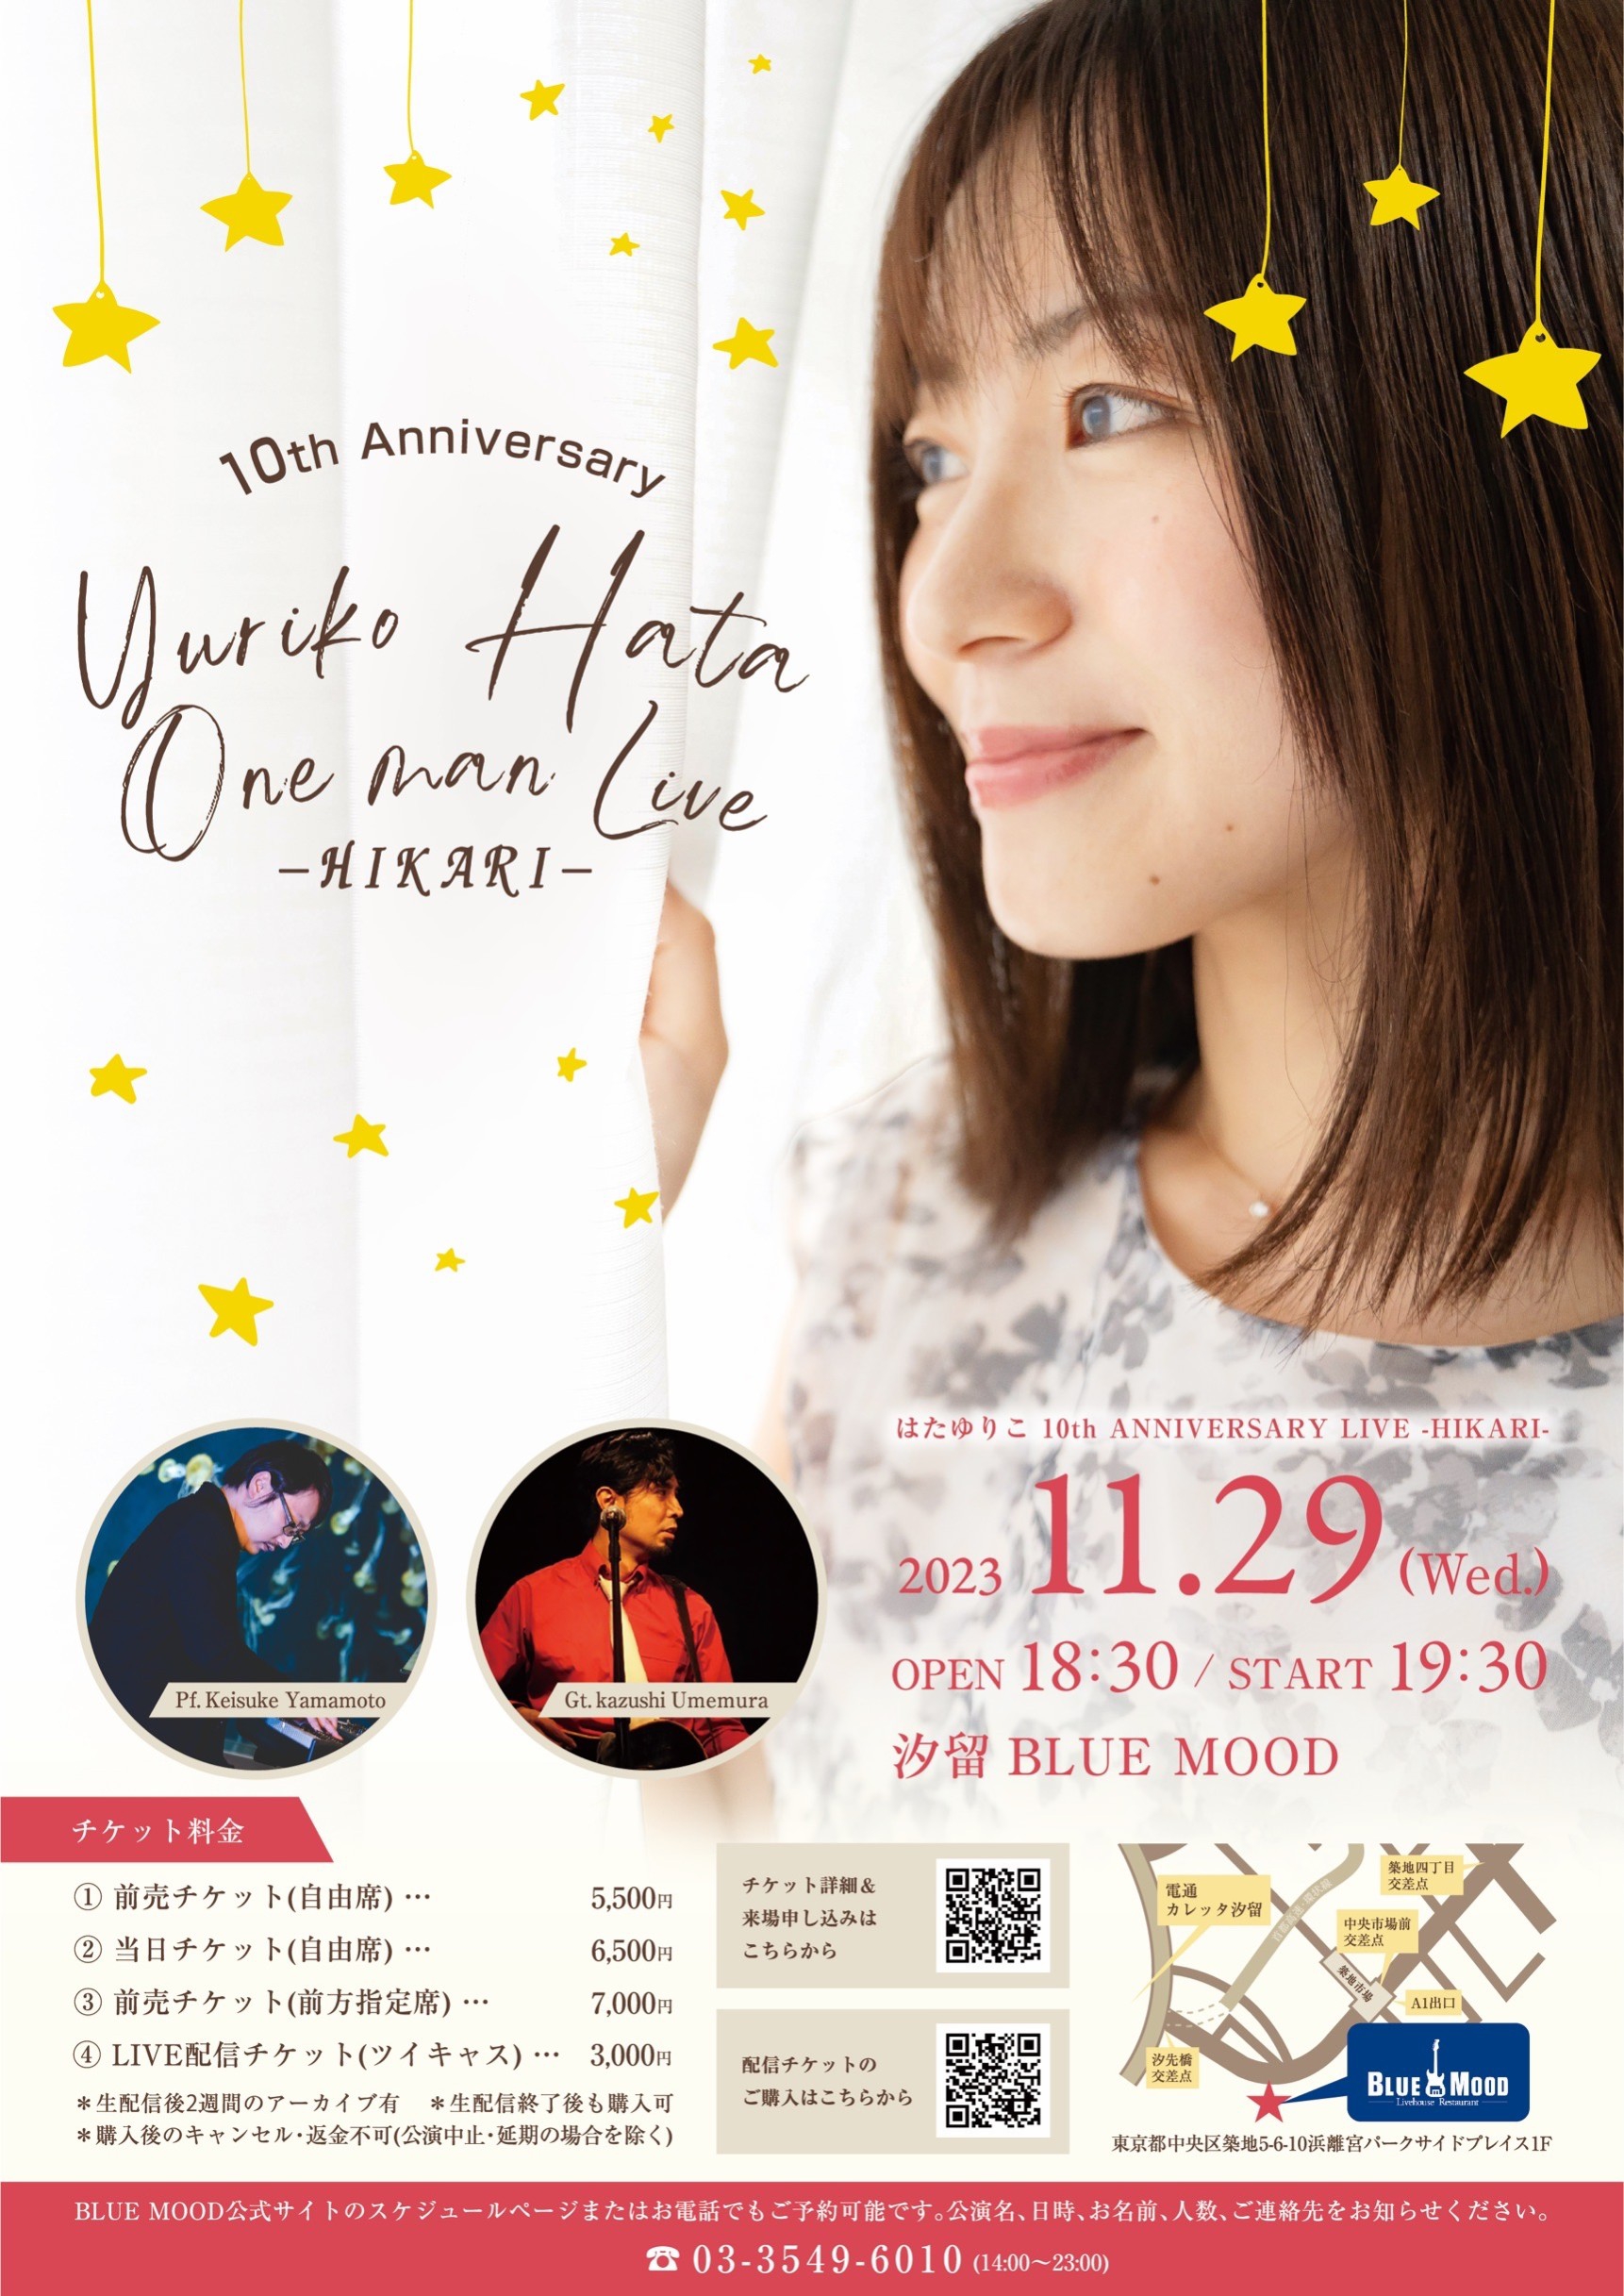 schedule | HATA YURIKO Official Site